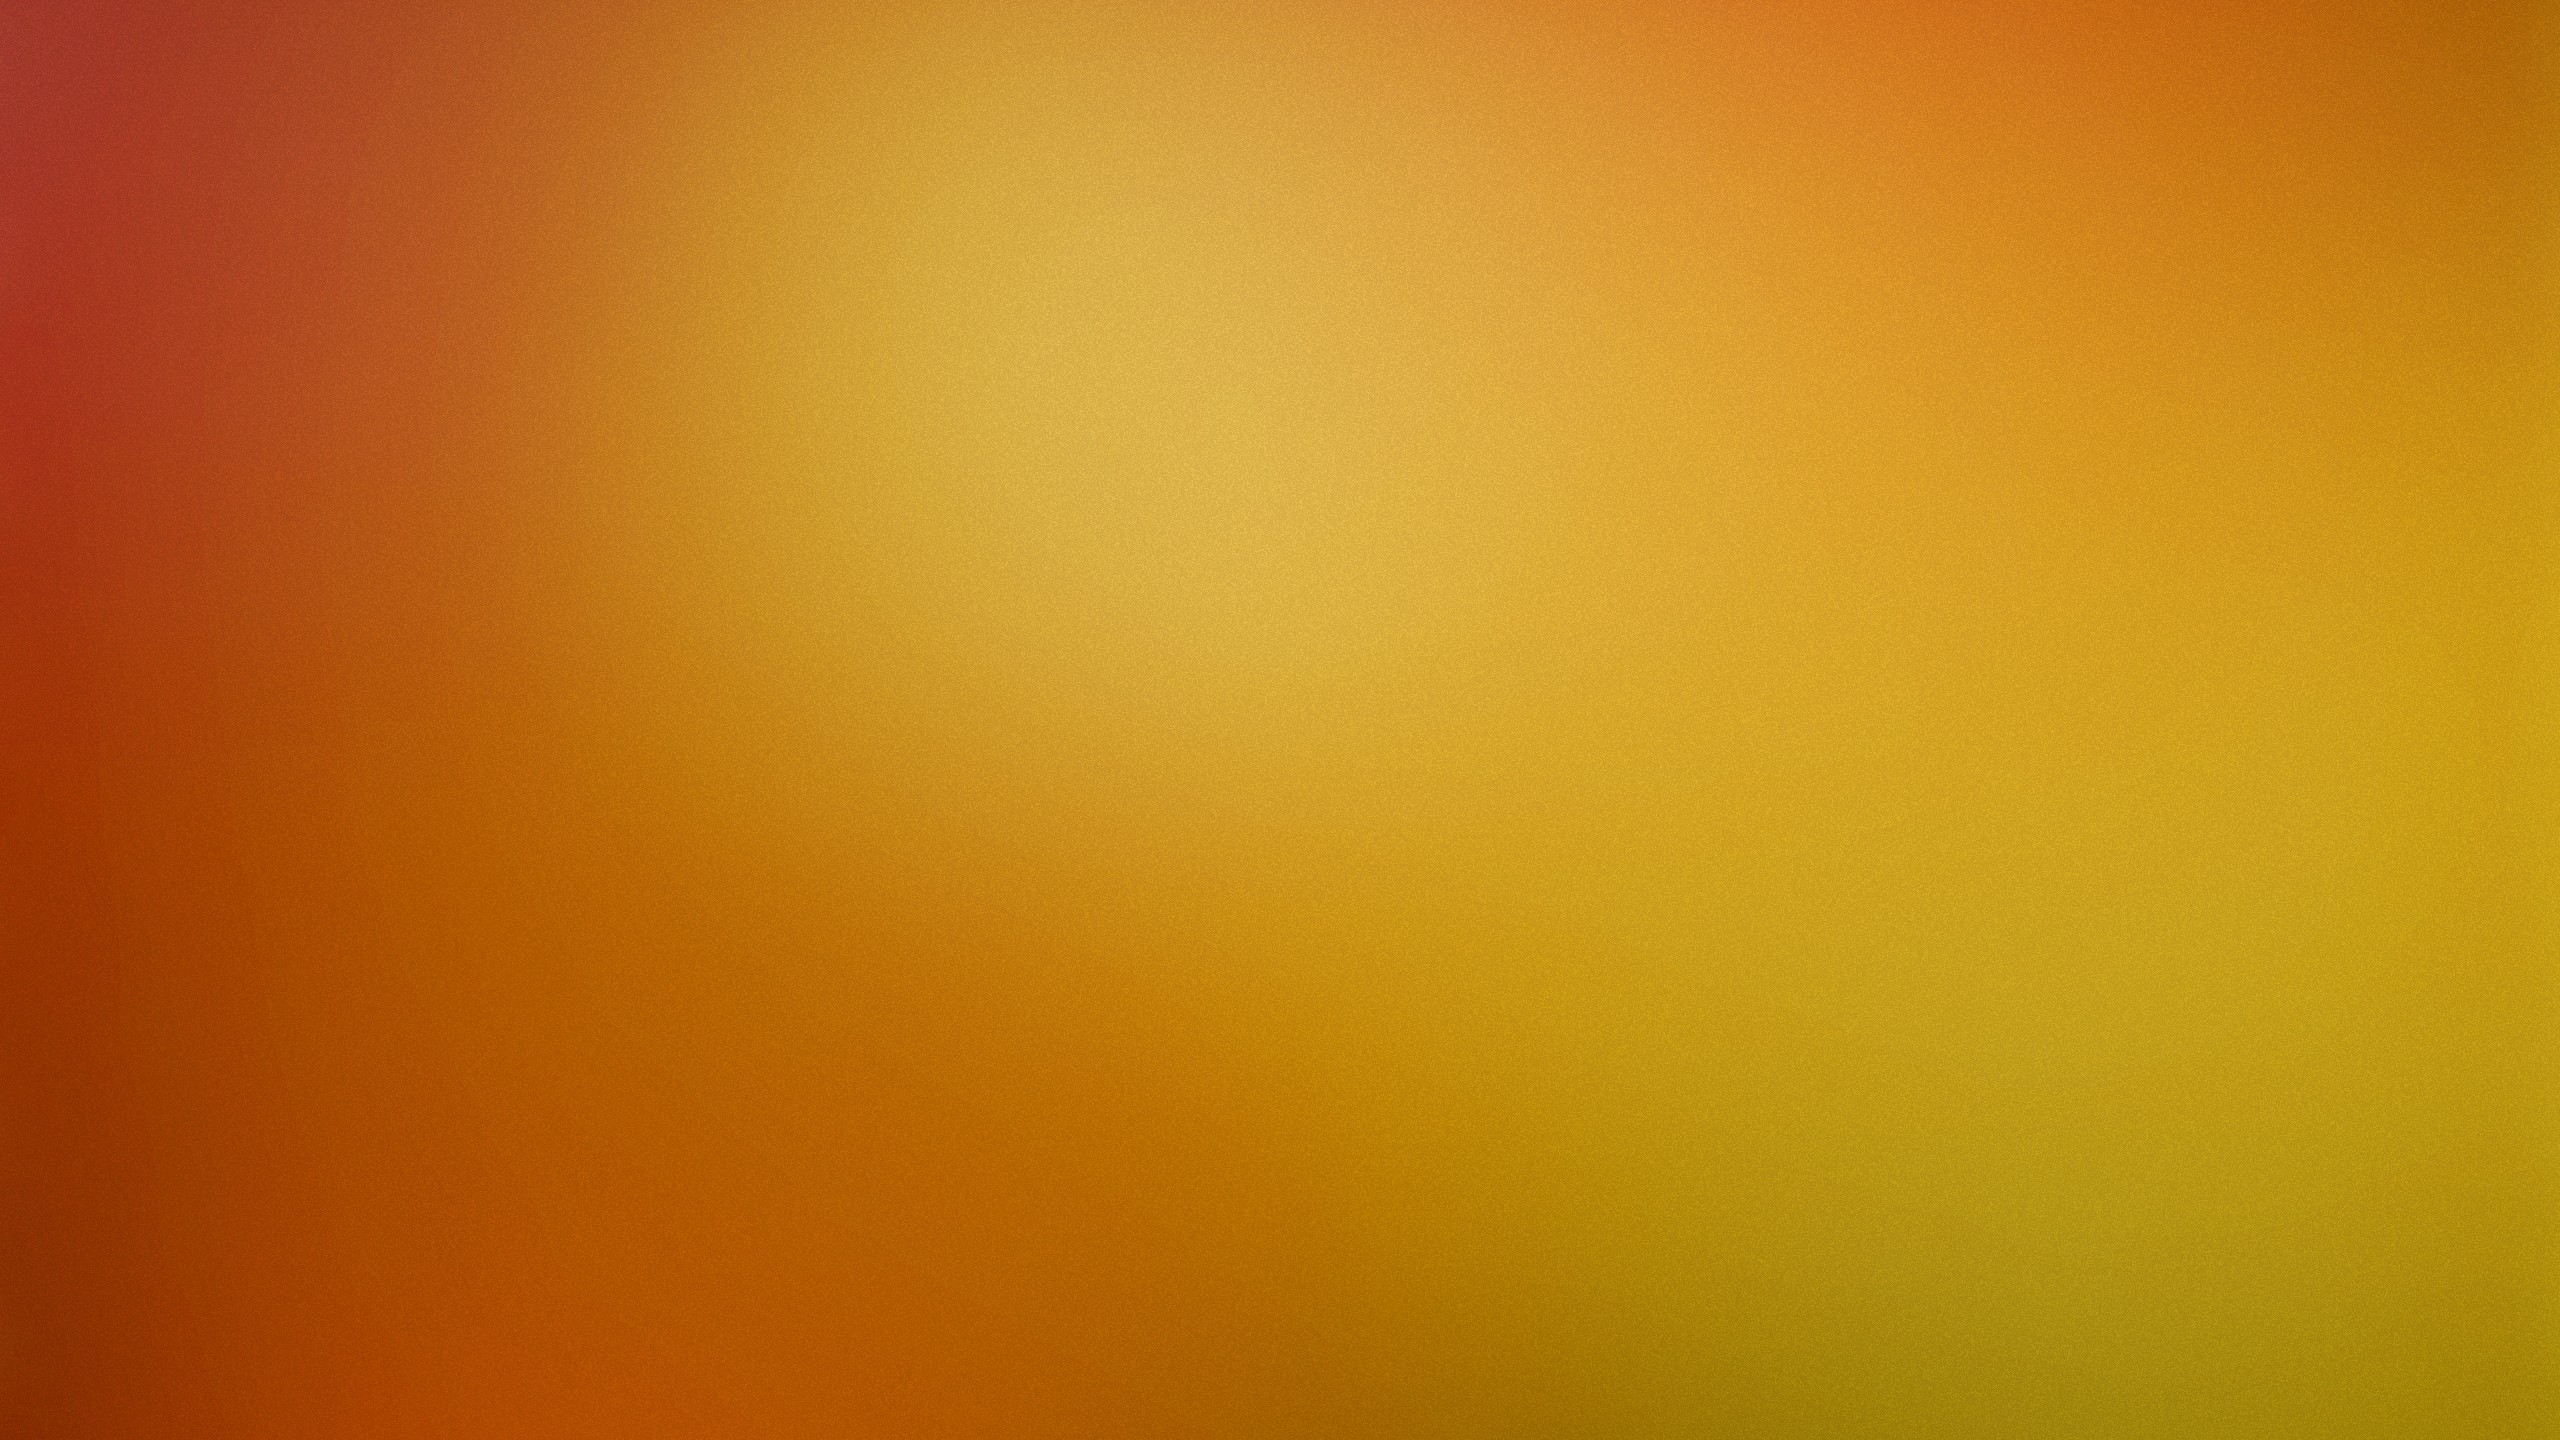 General 2560x1440 orange yellow minimalism gradient texture